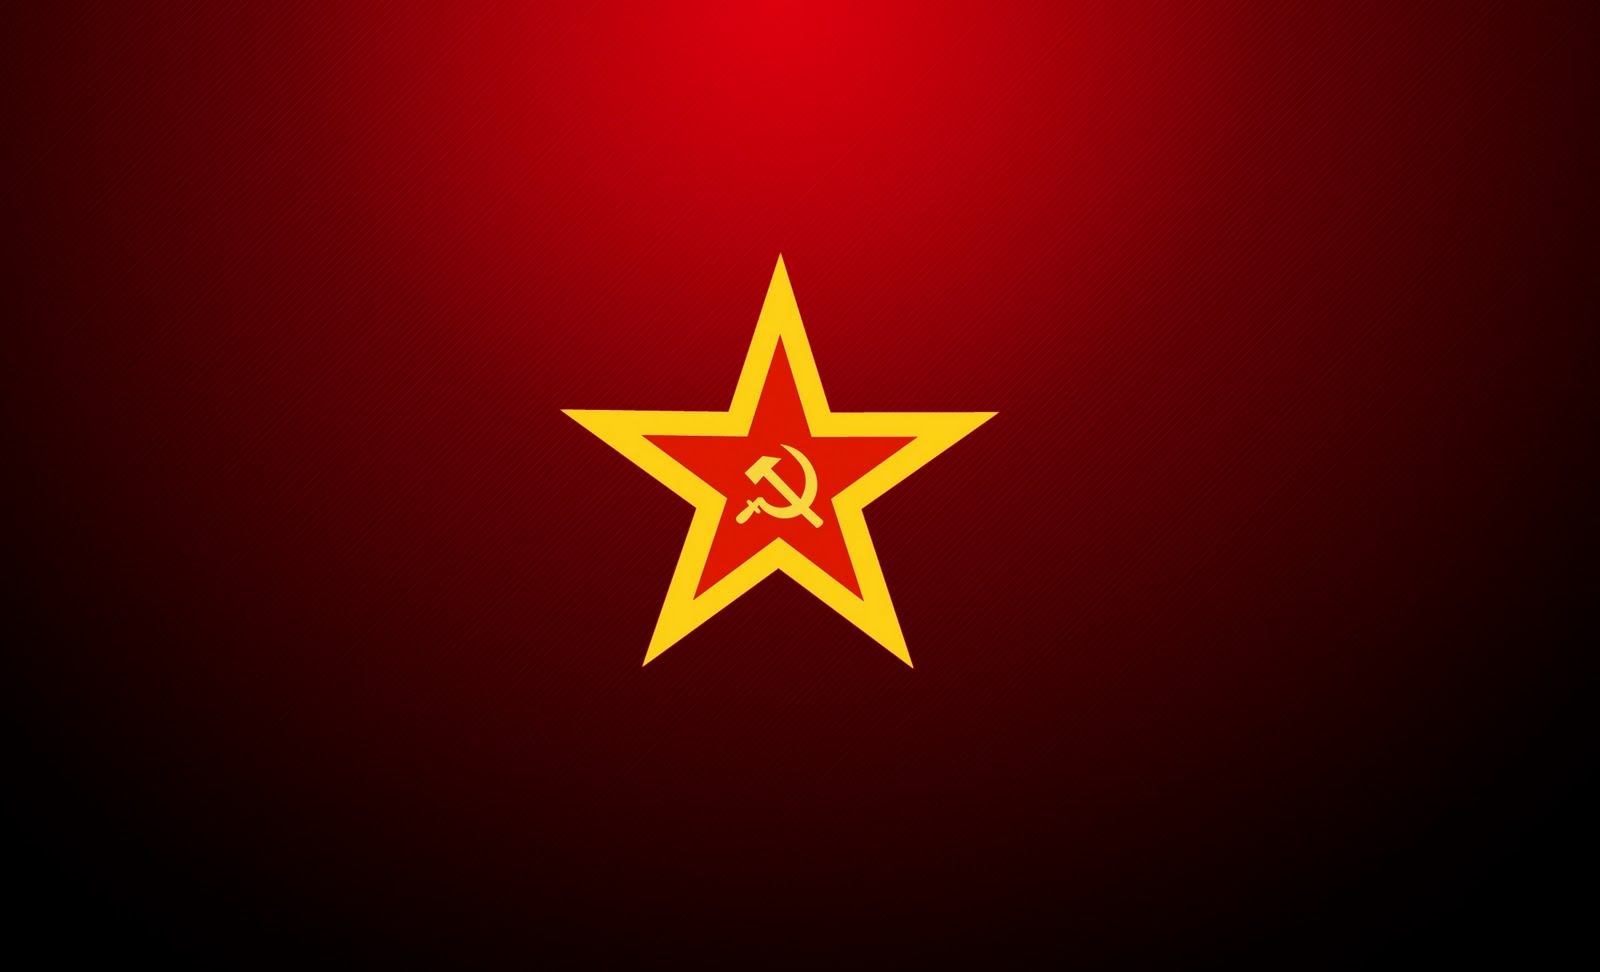 Background Ex Munists Symblos Red Army Soviet Russia X